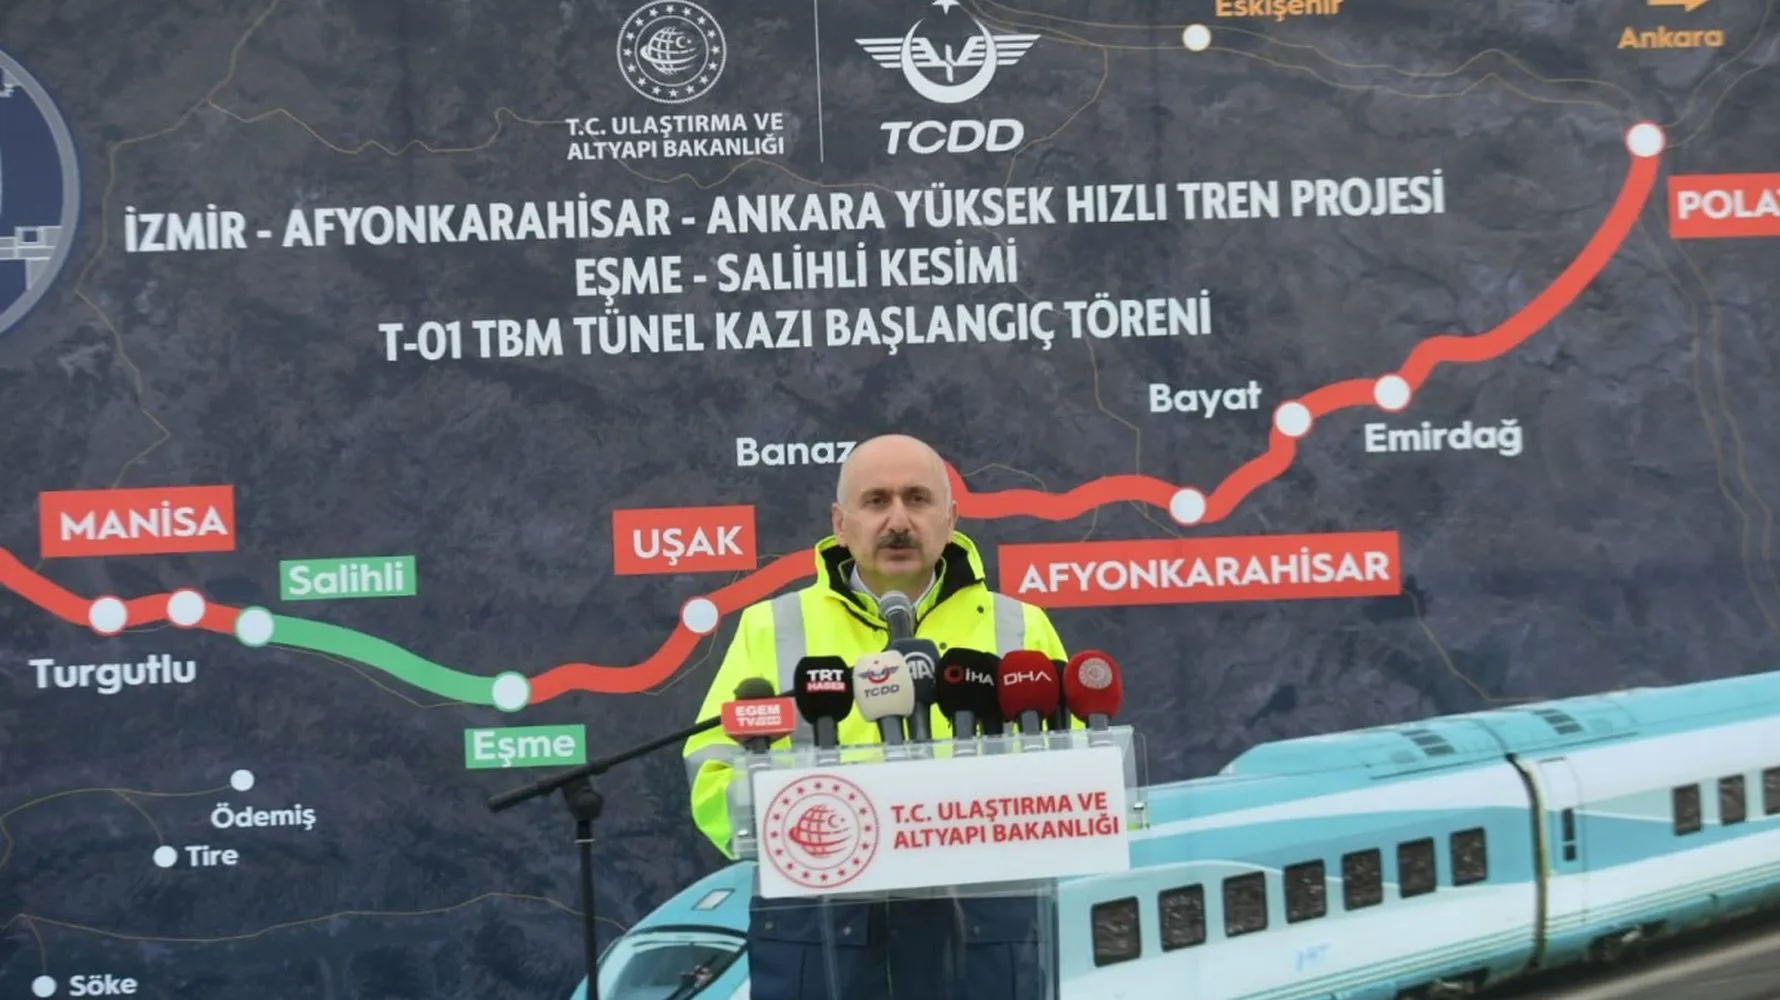 Ankara-İzmir YHT projesine onay çıktı